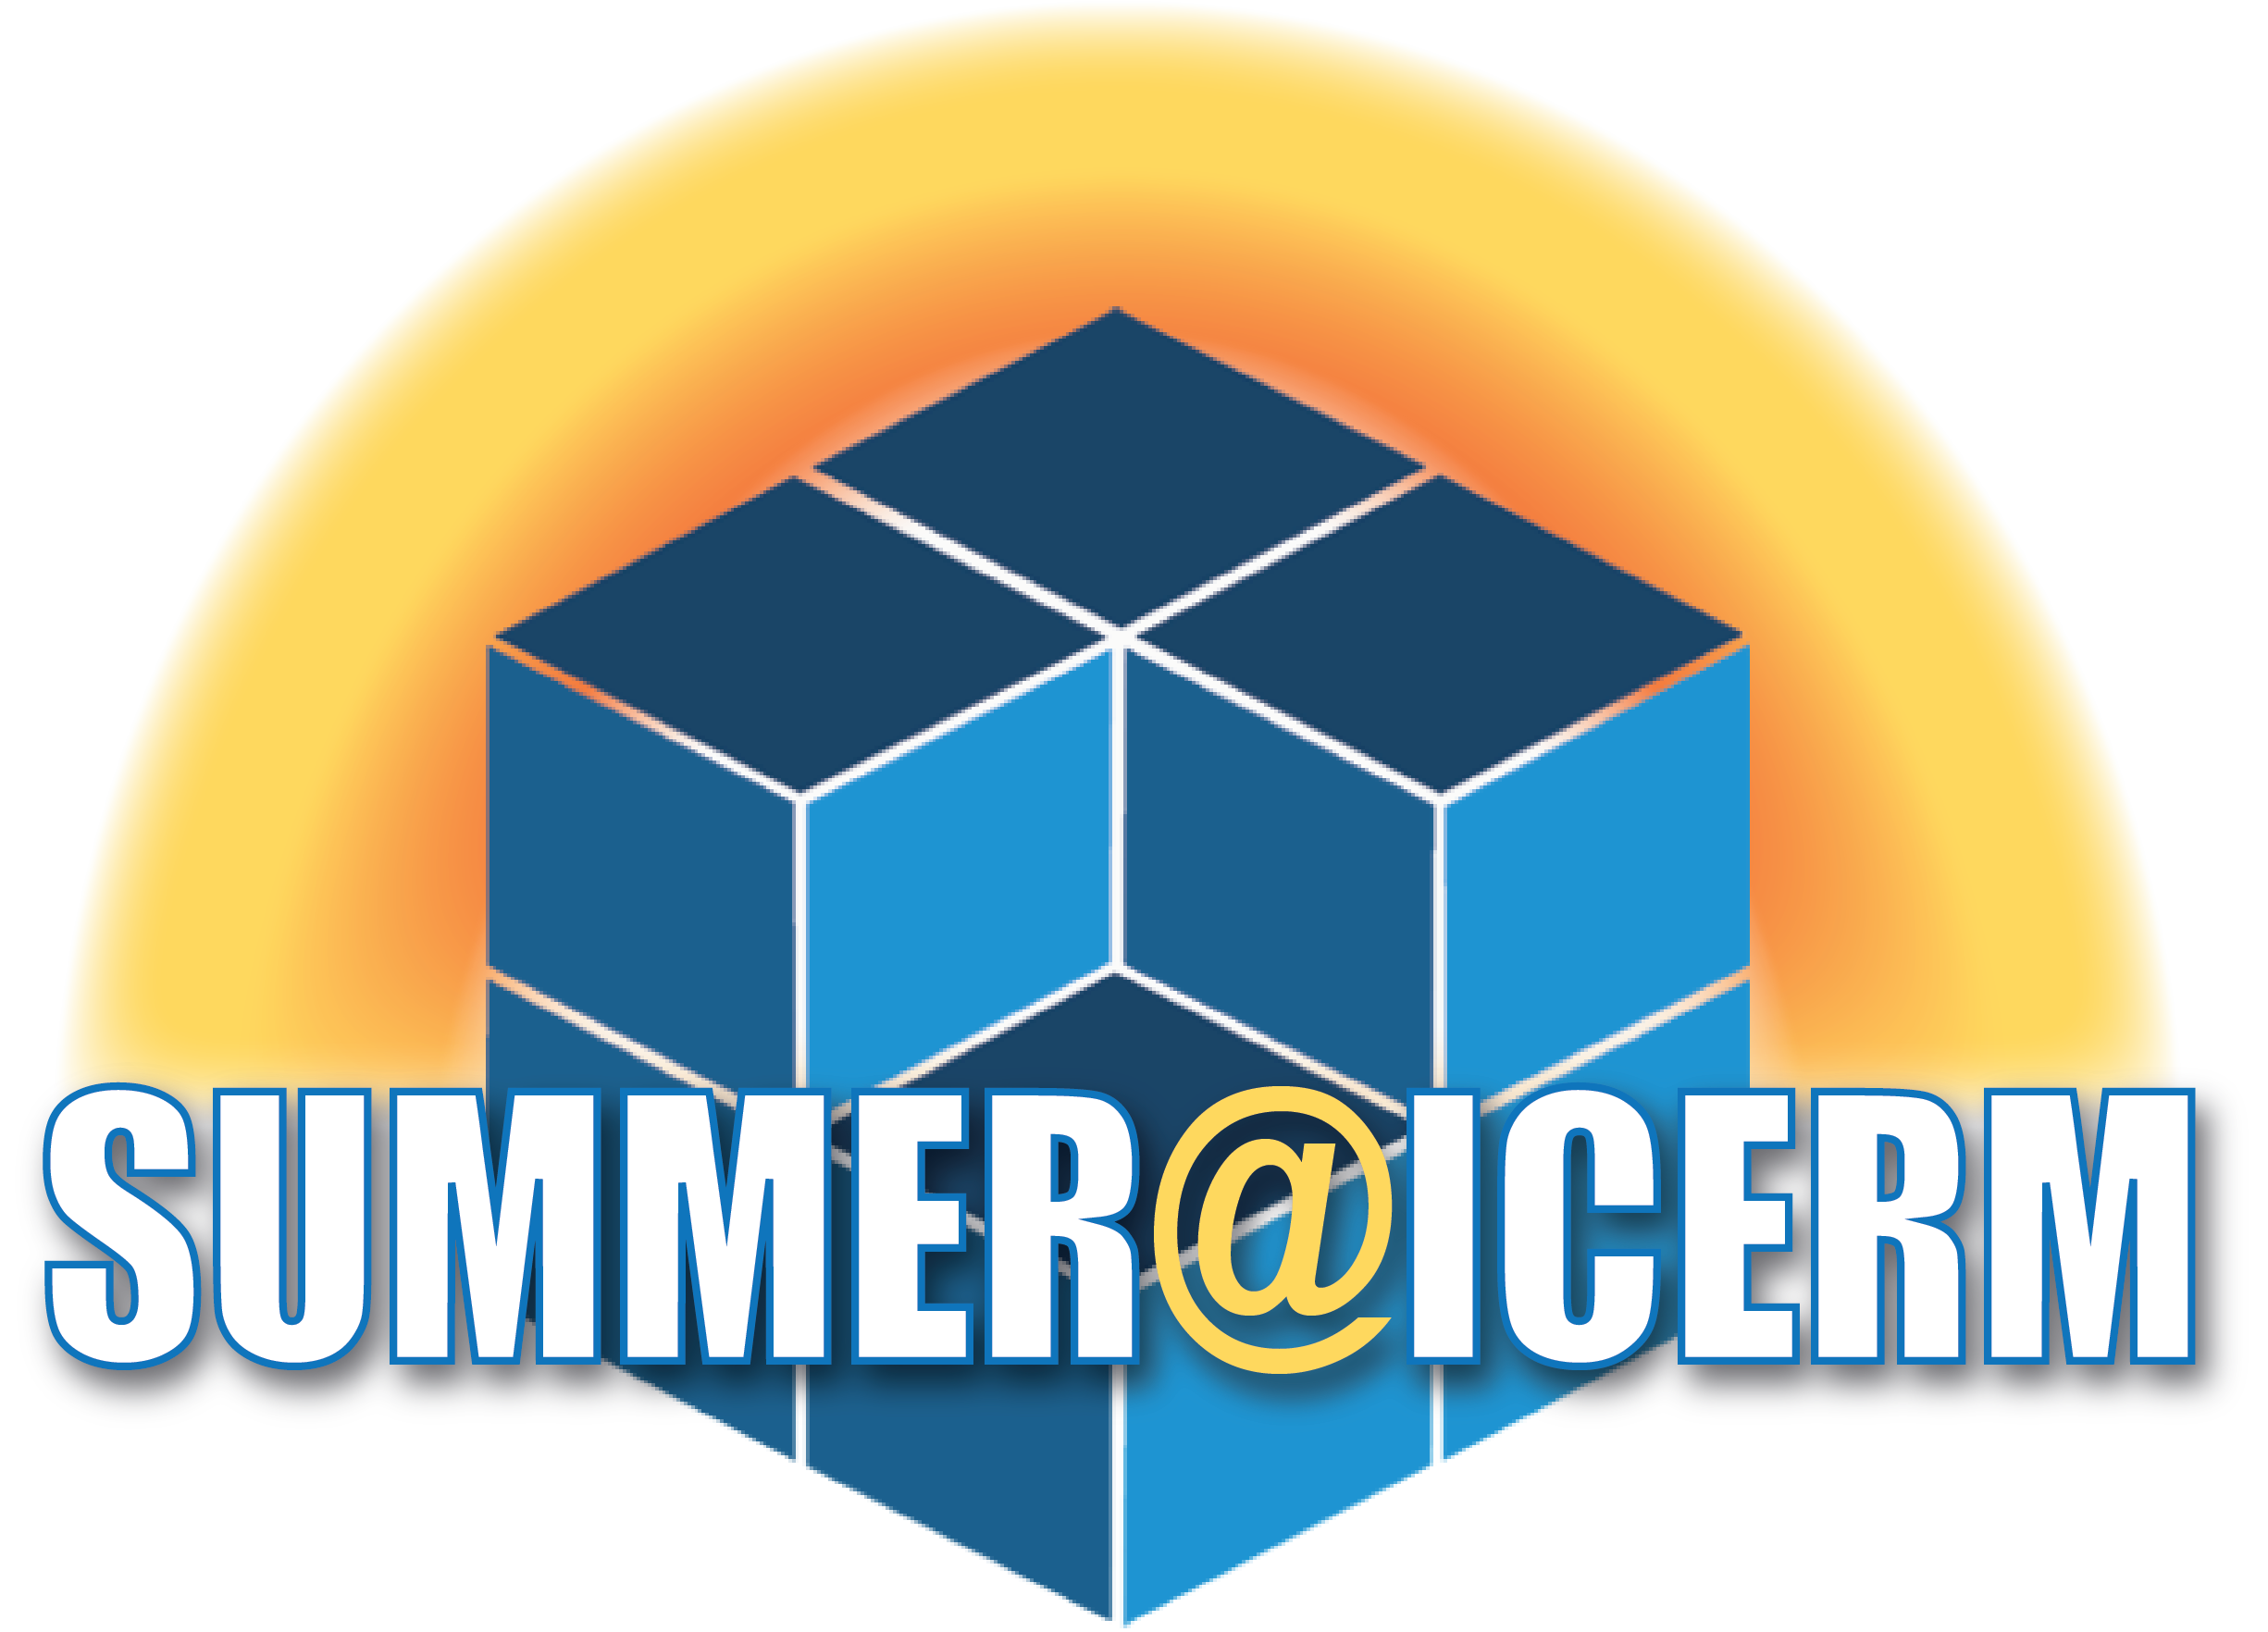 Summer@ICERM logo